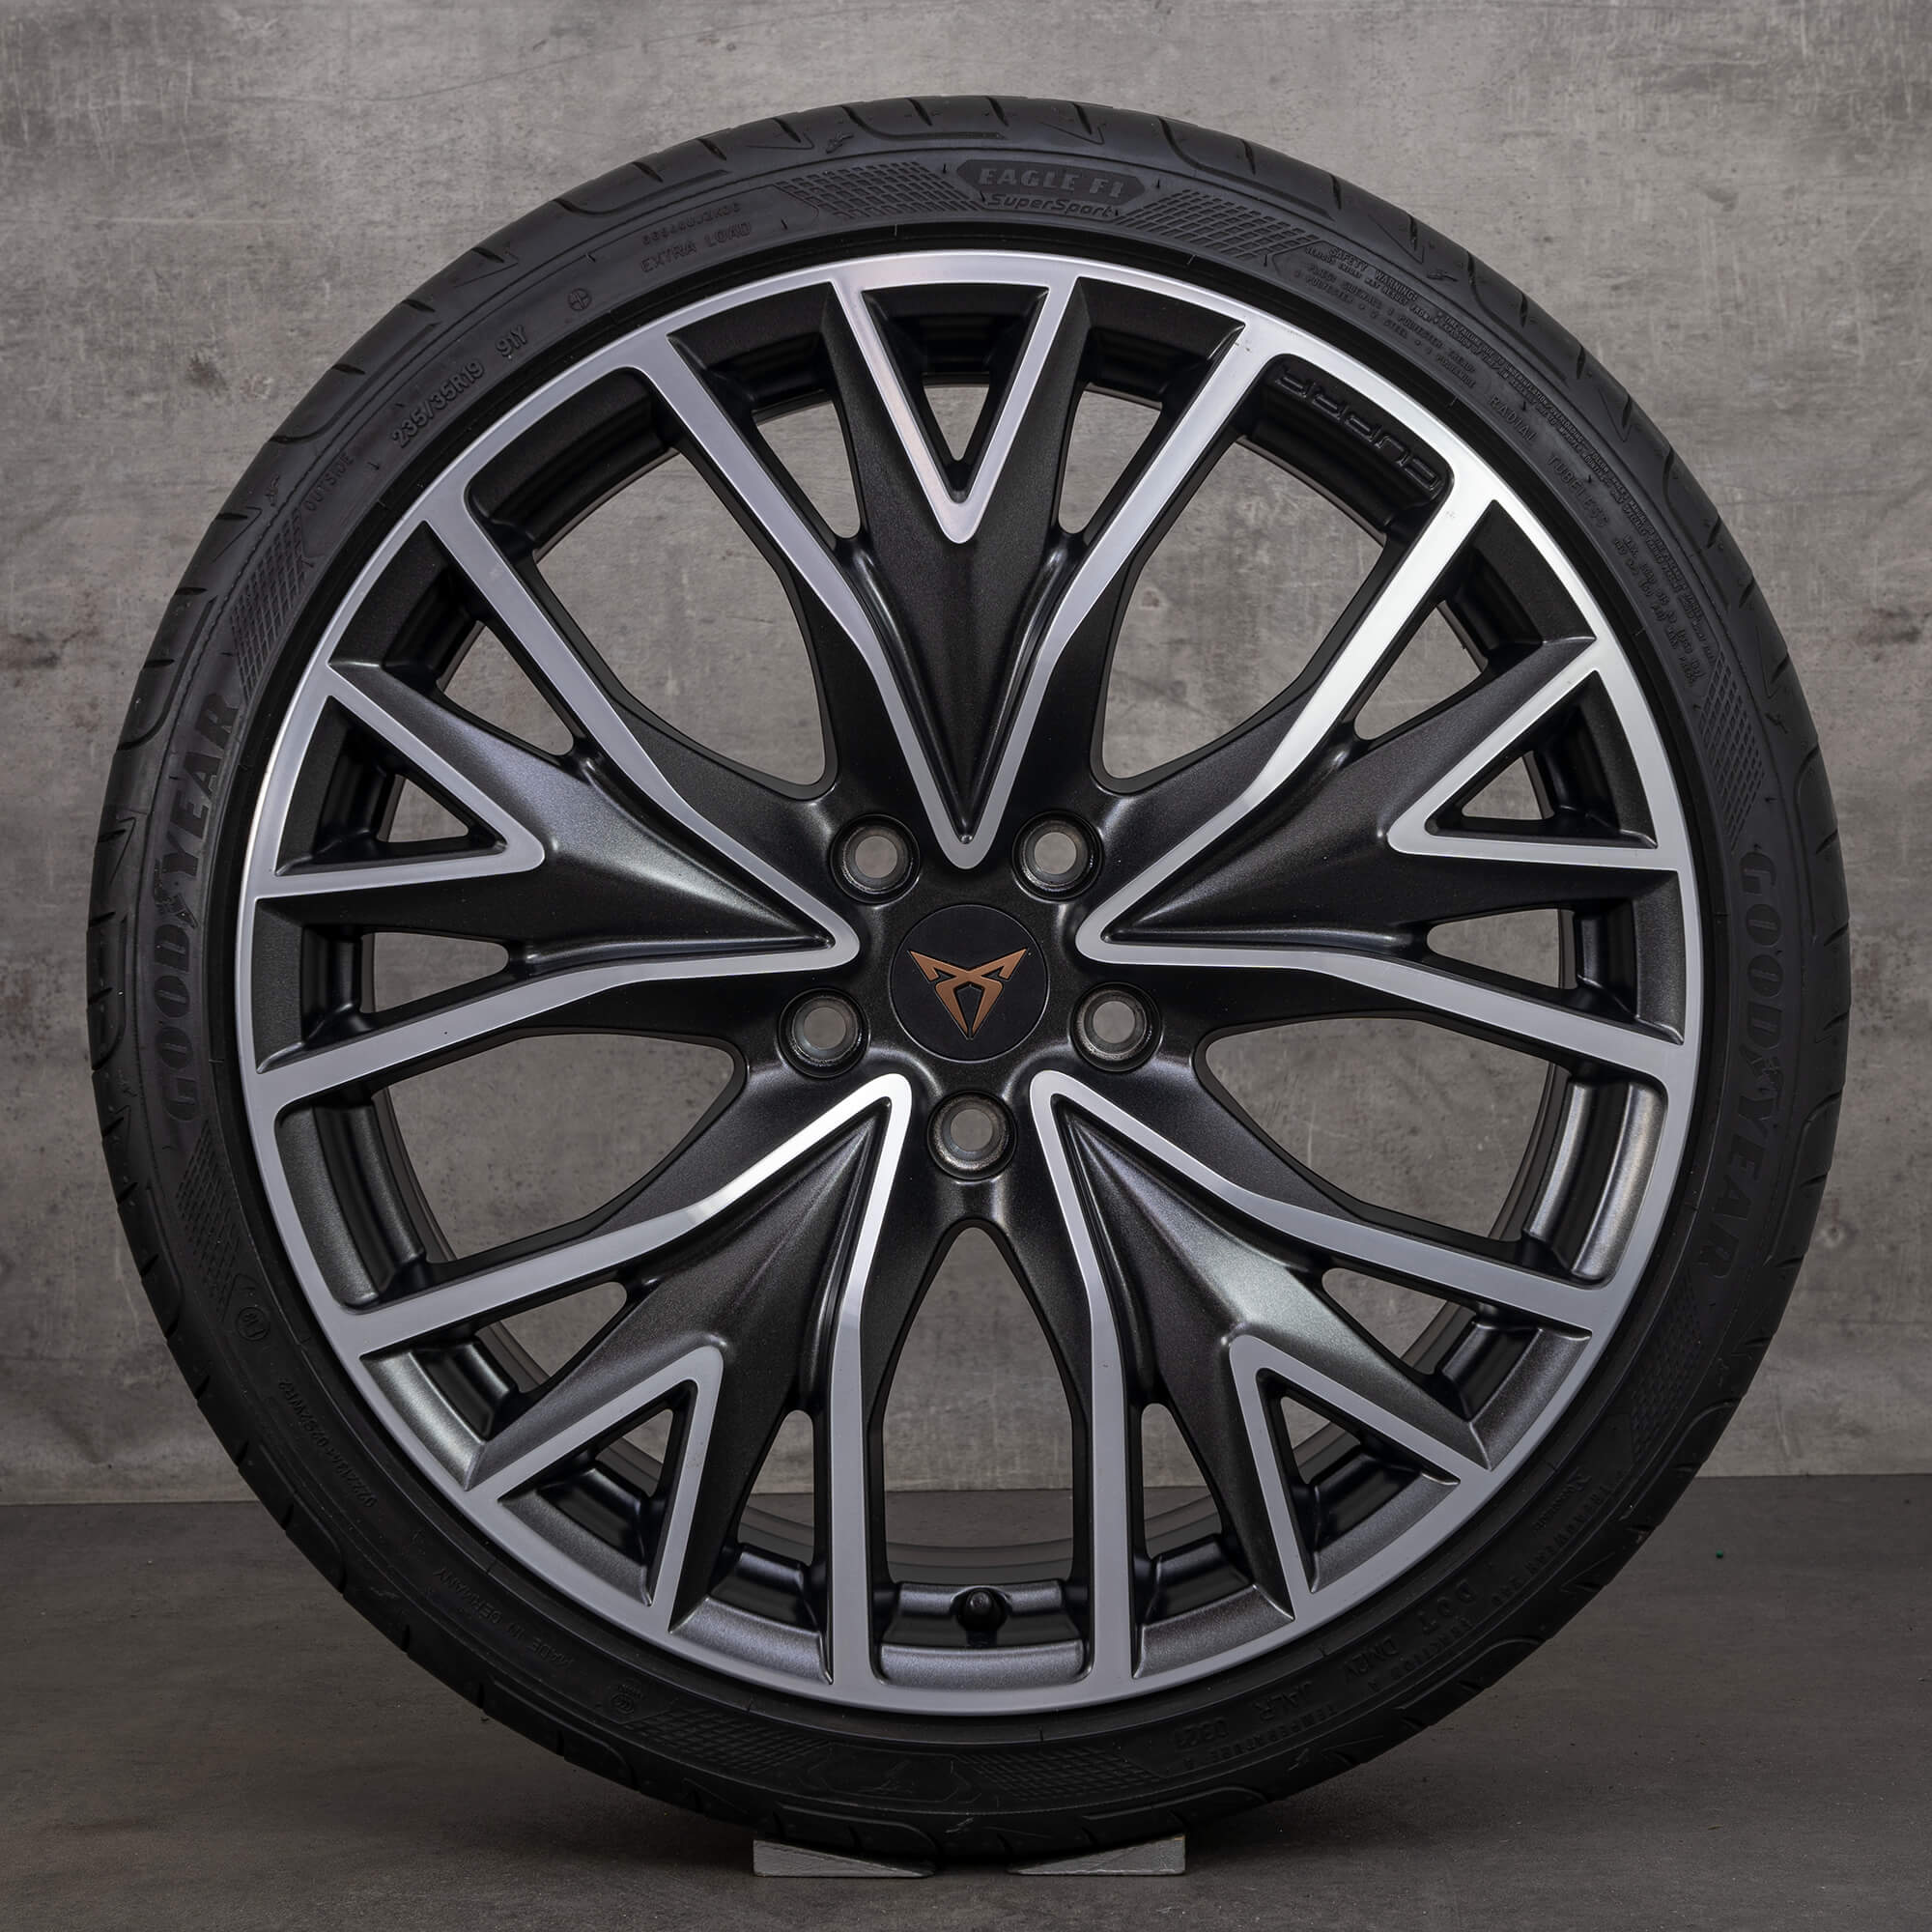 OEM Seat Leon Cupra 5F 19 inch winter tires rims 5FA601025R